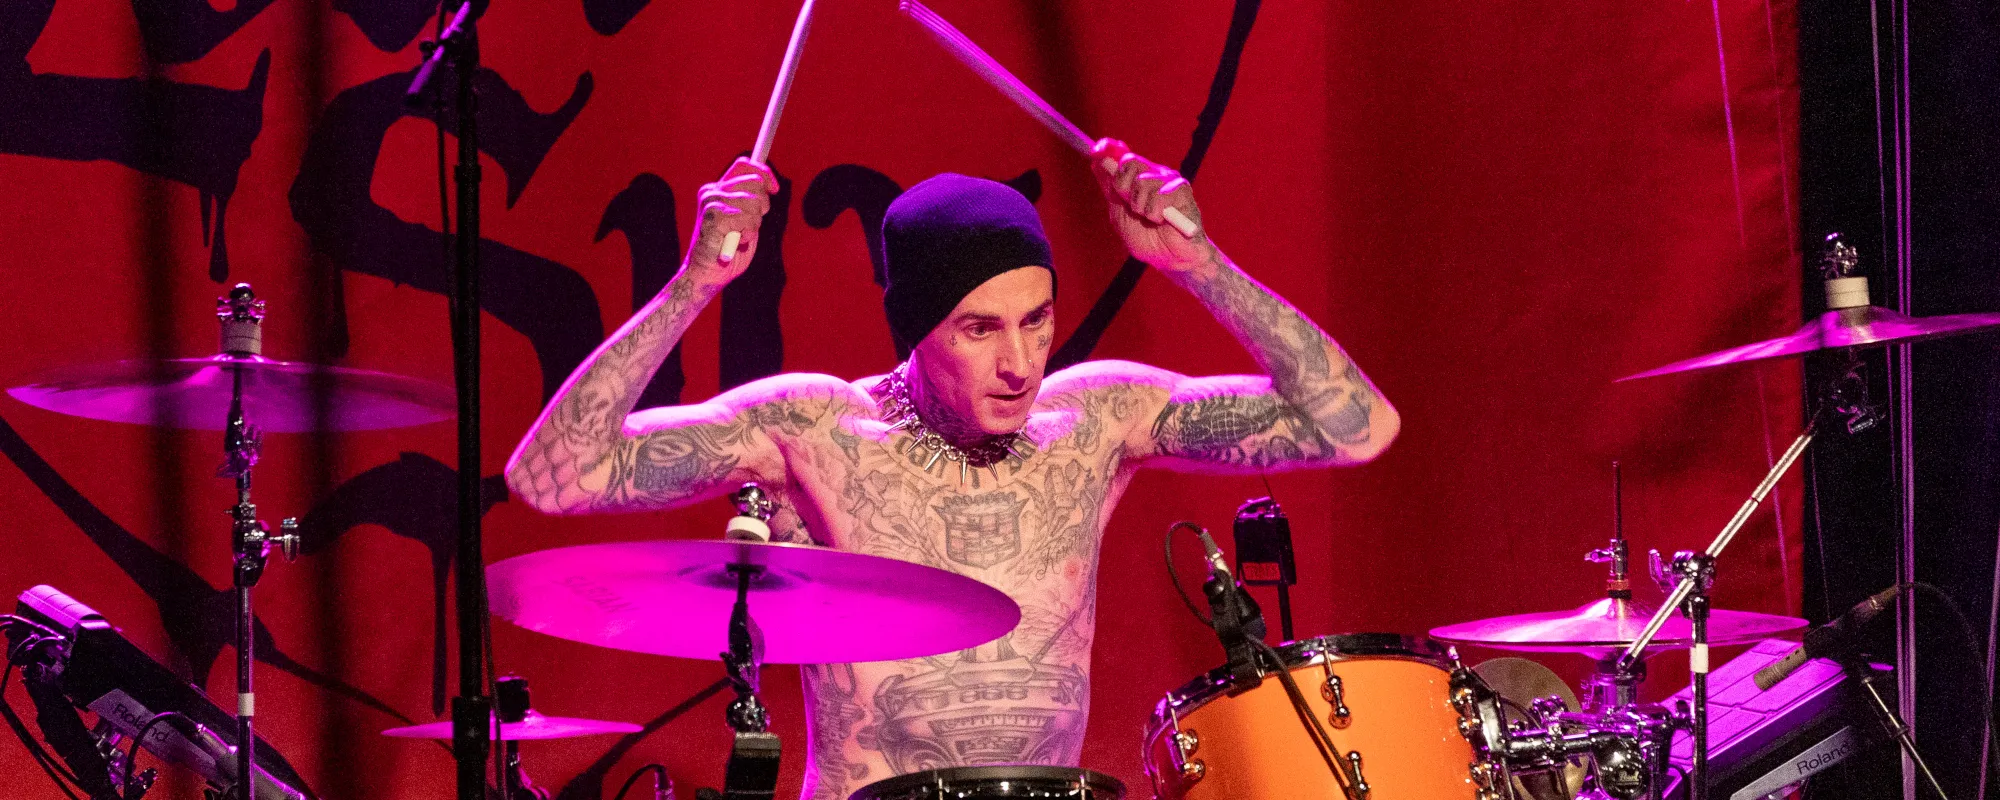 Blink-182 Drummer Travis Barker Rushed to Hospital in Los Angeles